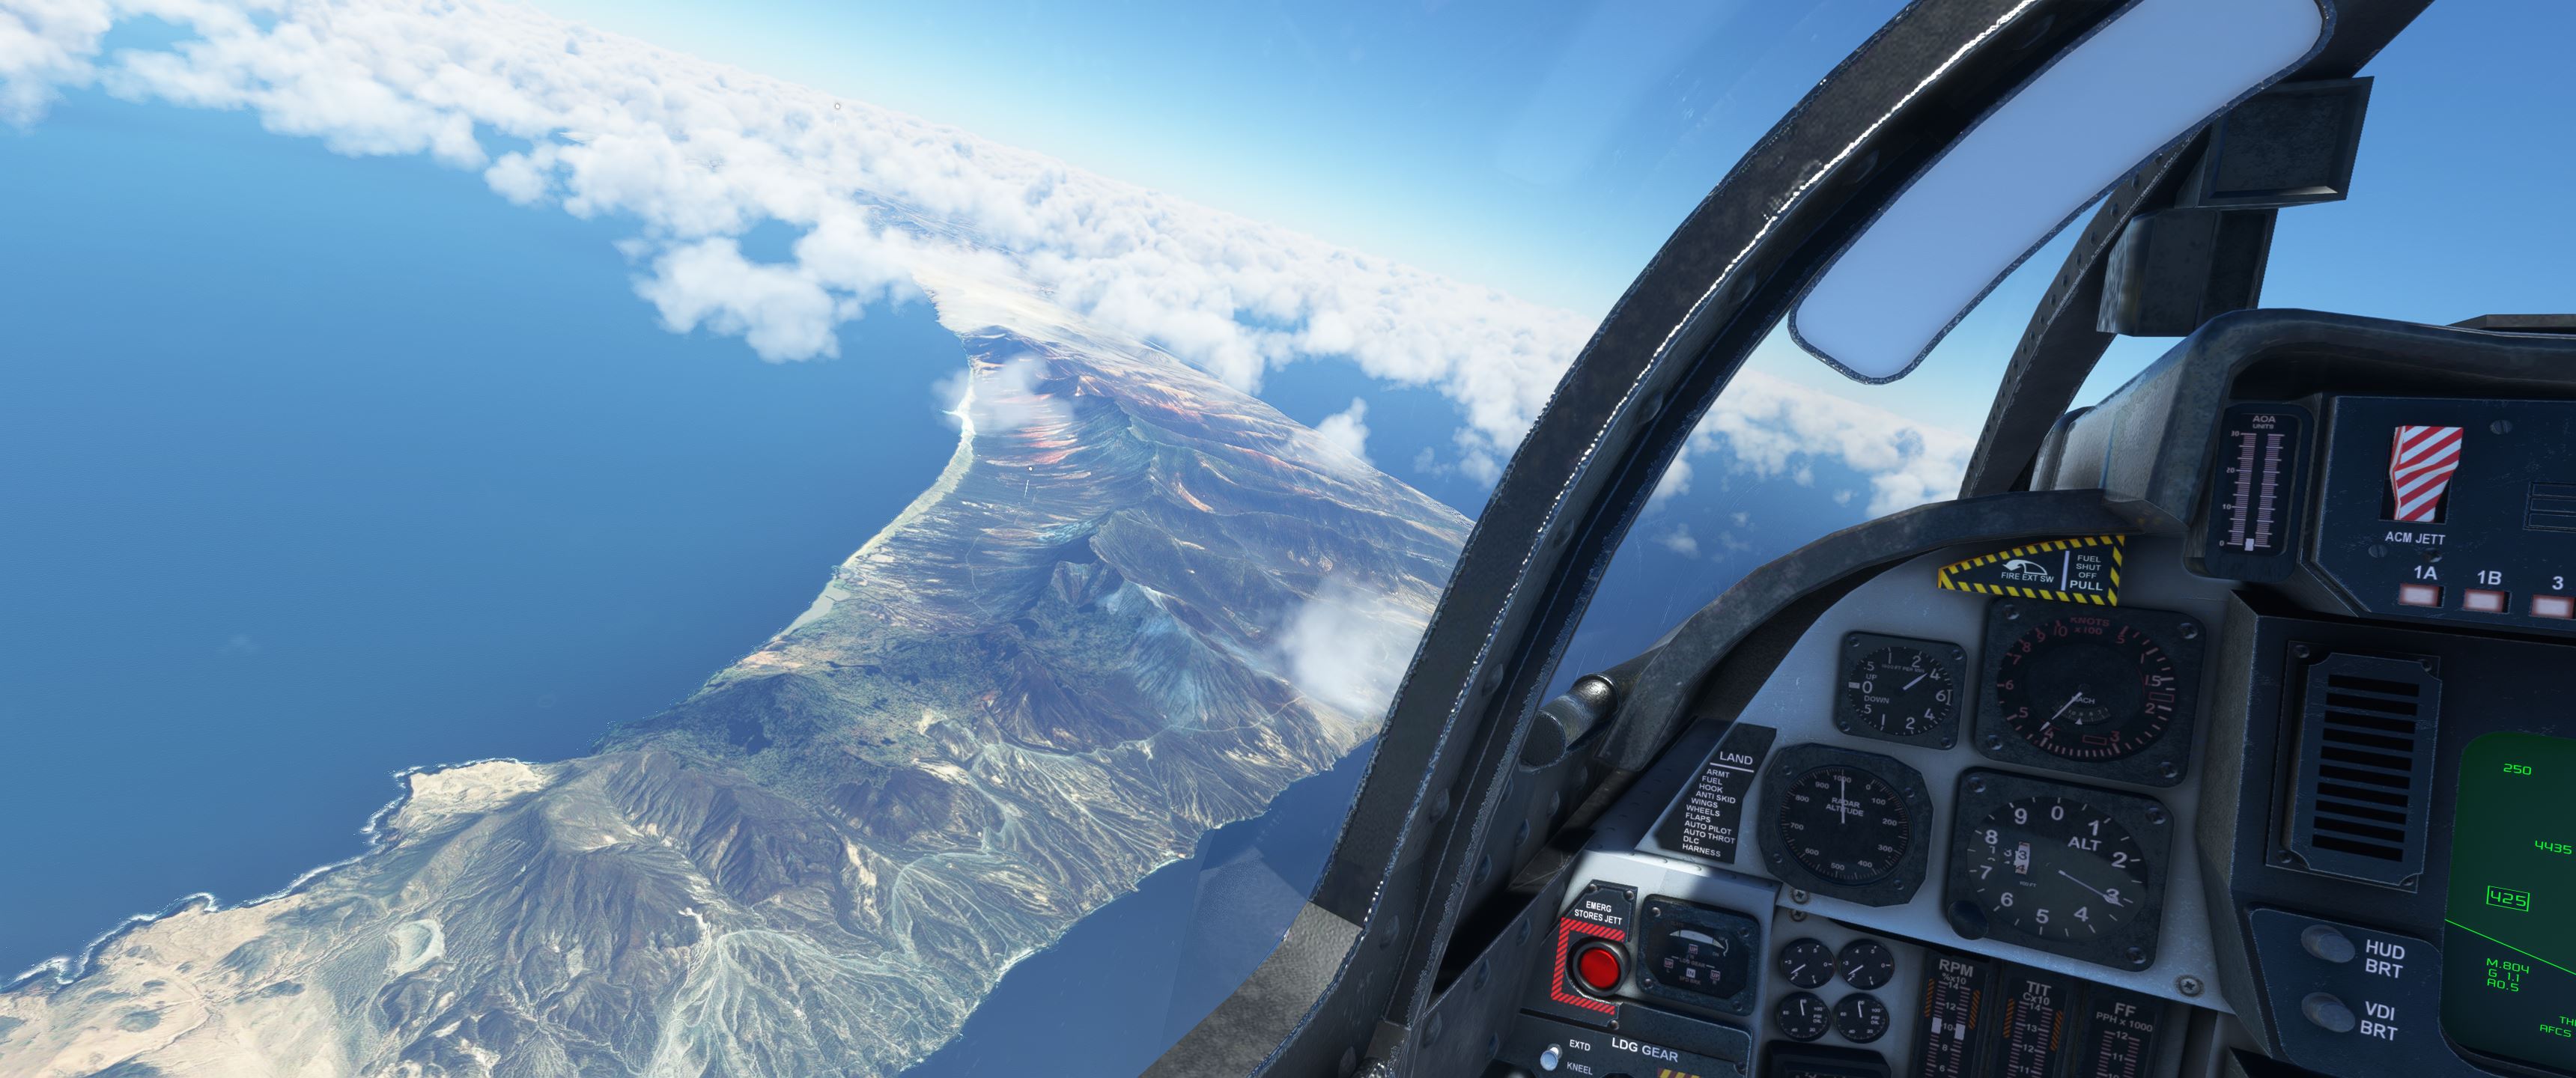 2022-07-01 15_15_31-Microsoft Flight Simulator - 1.26.5.0.jpg